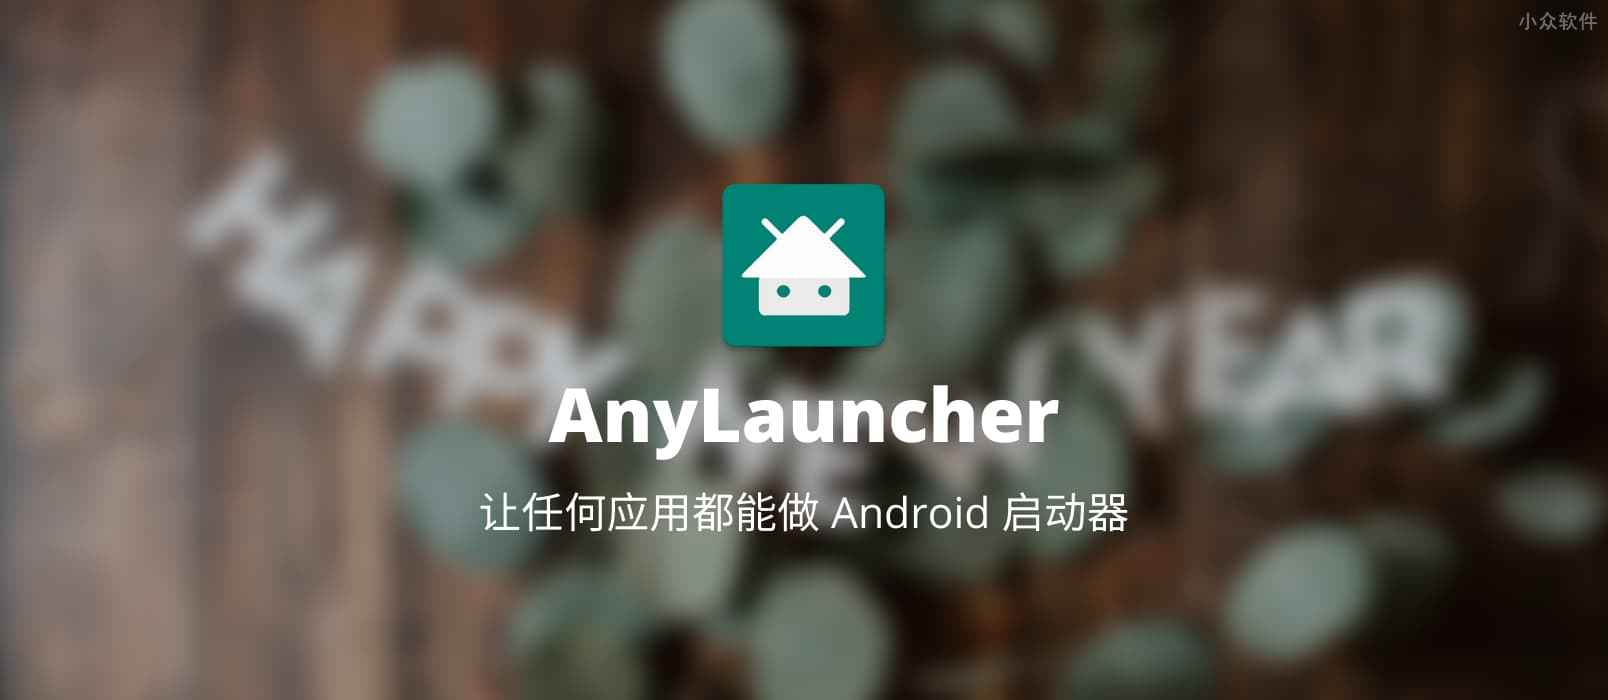 AnyLauncher – 让任何应用都能做 Android 启动器[备机/专用机必备]